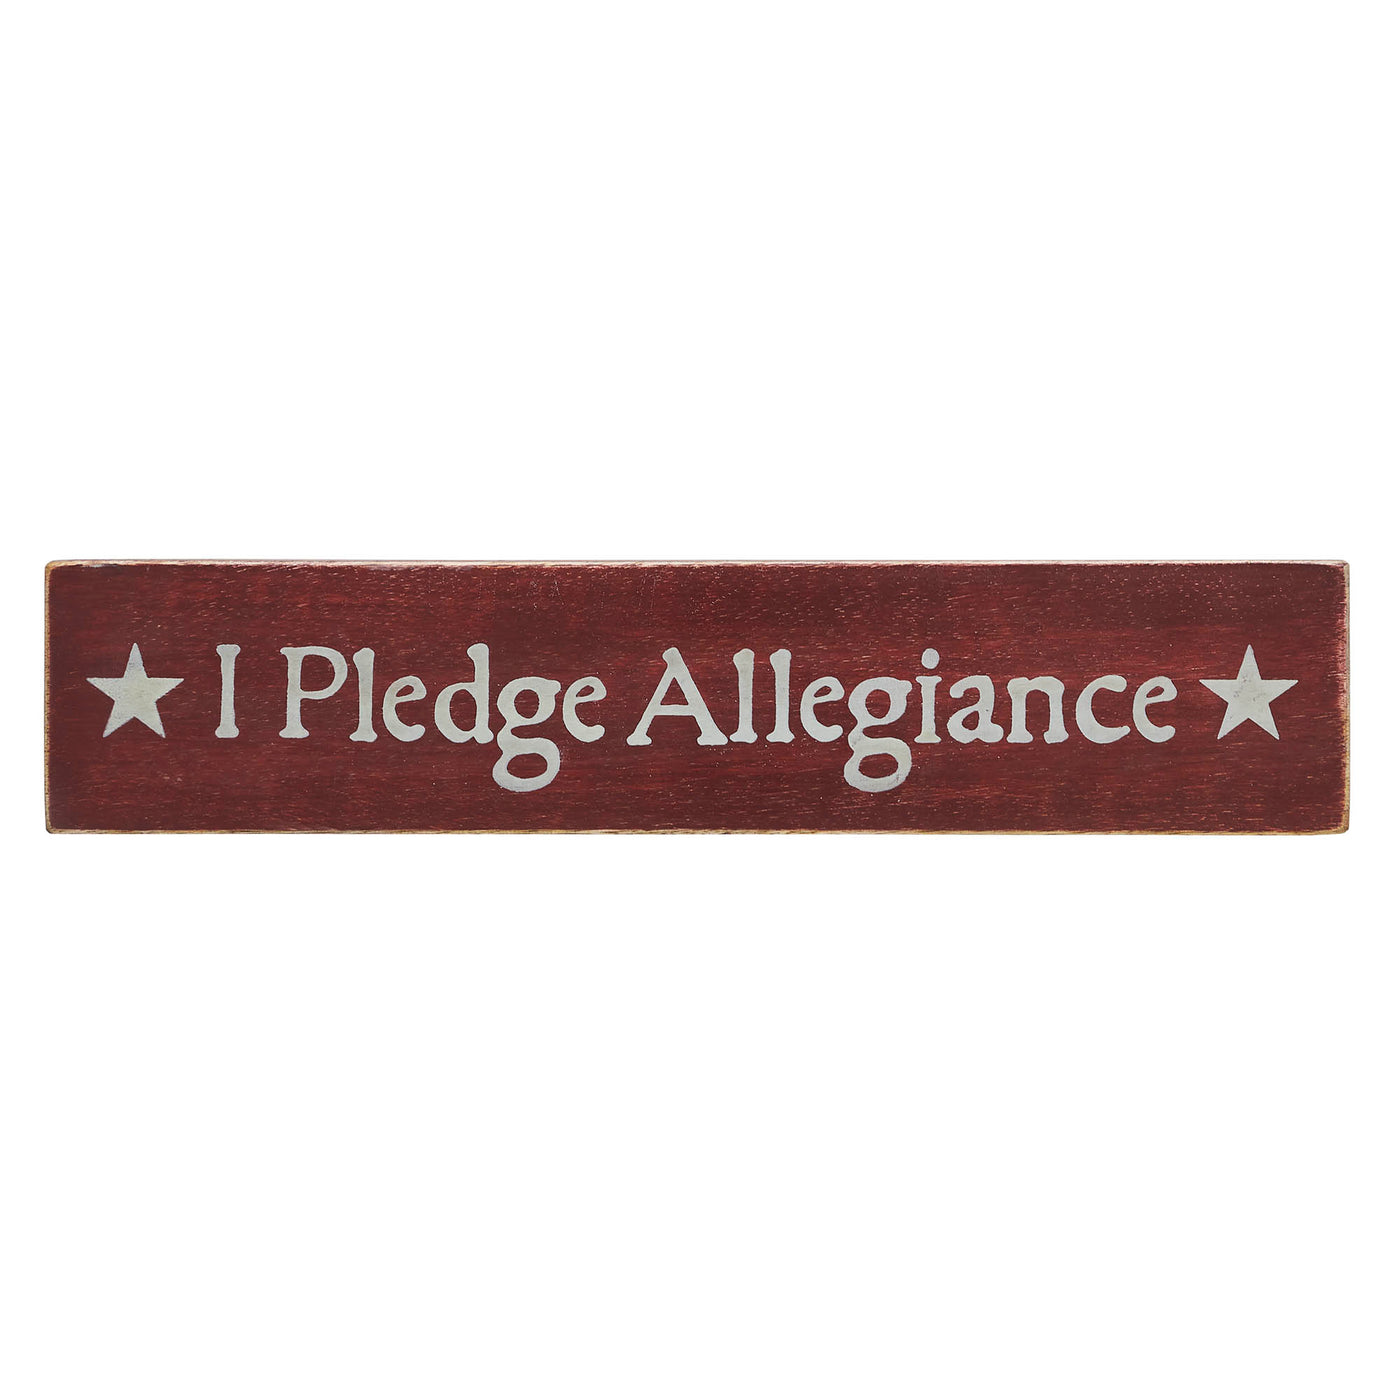 I Pledge Allegiance 13" Red Wooden Sign